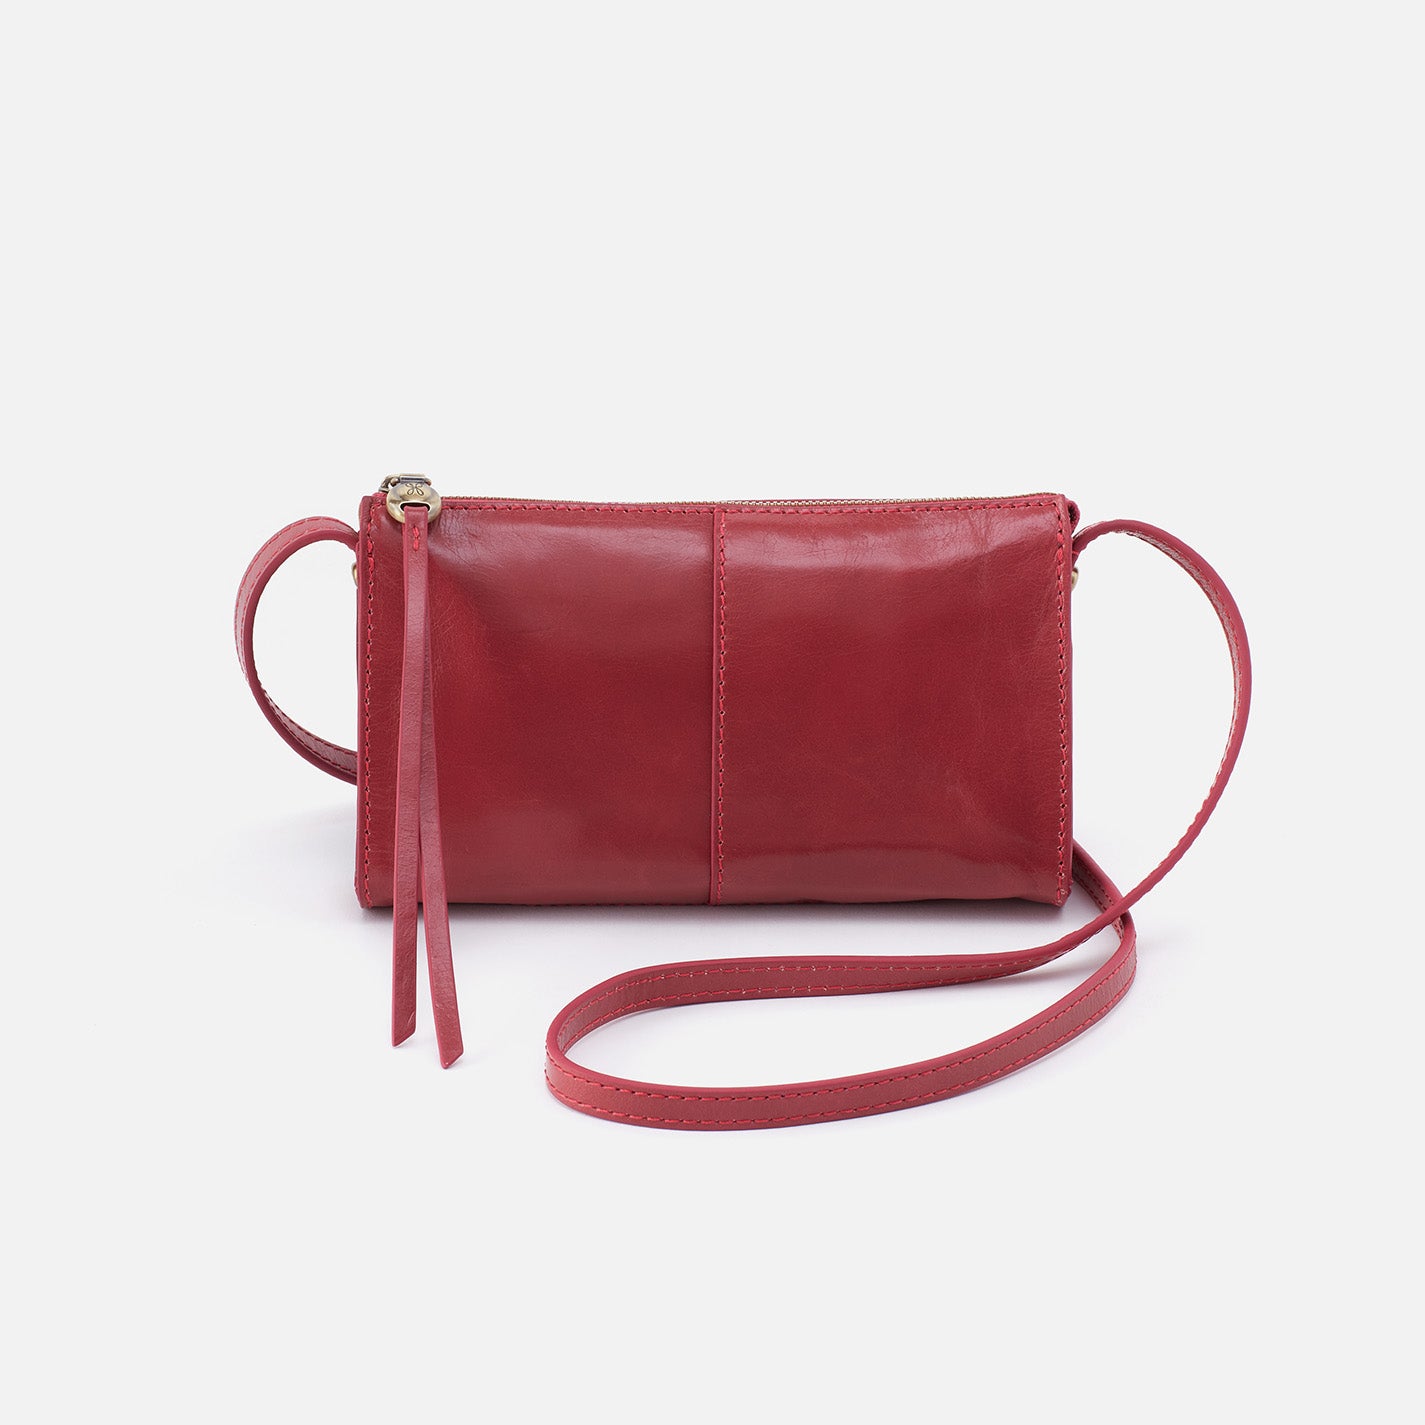 Darling in Blush by New Vintage Handbags